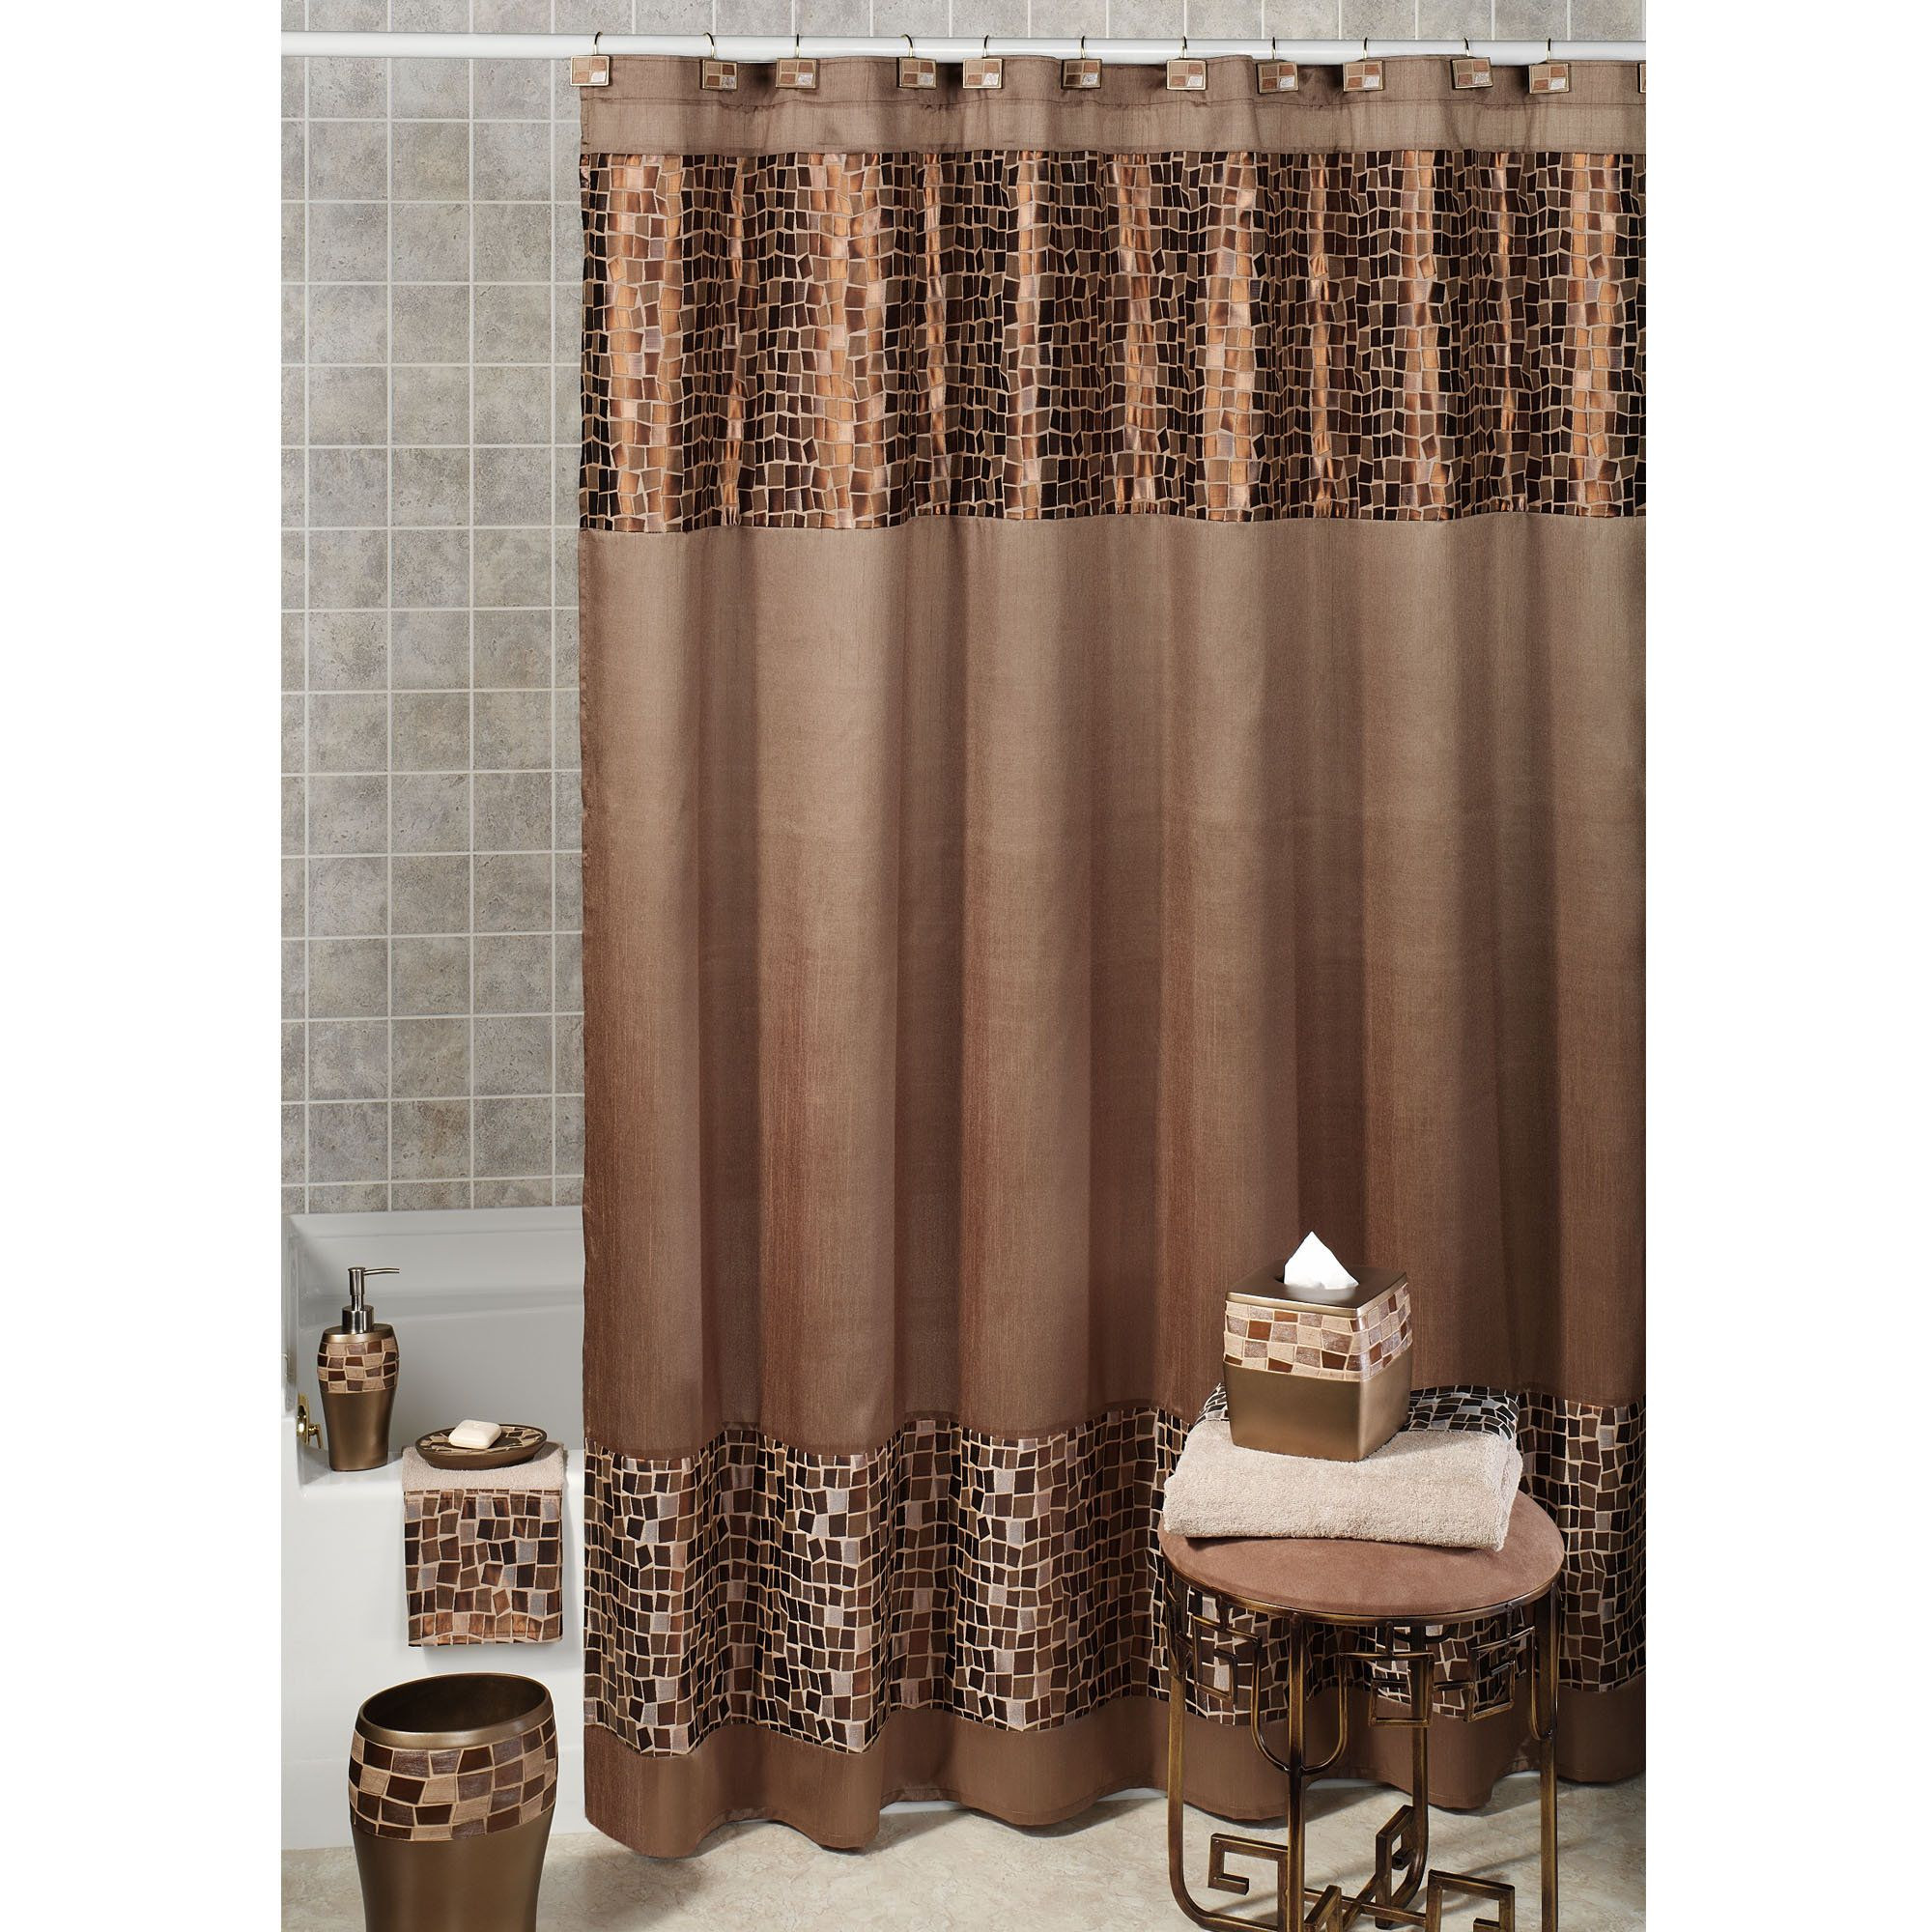 Elegant Bathroom Shower Curtains
 23 Elegant Bathroom Shower Curtain Ideas s Remodel